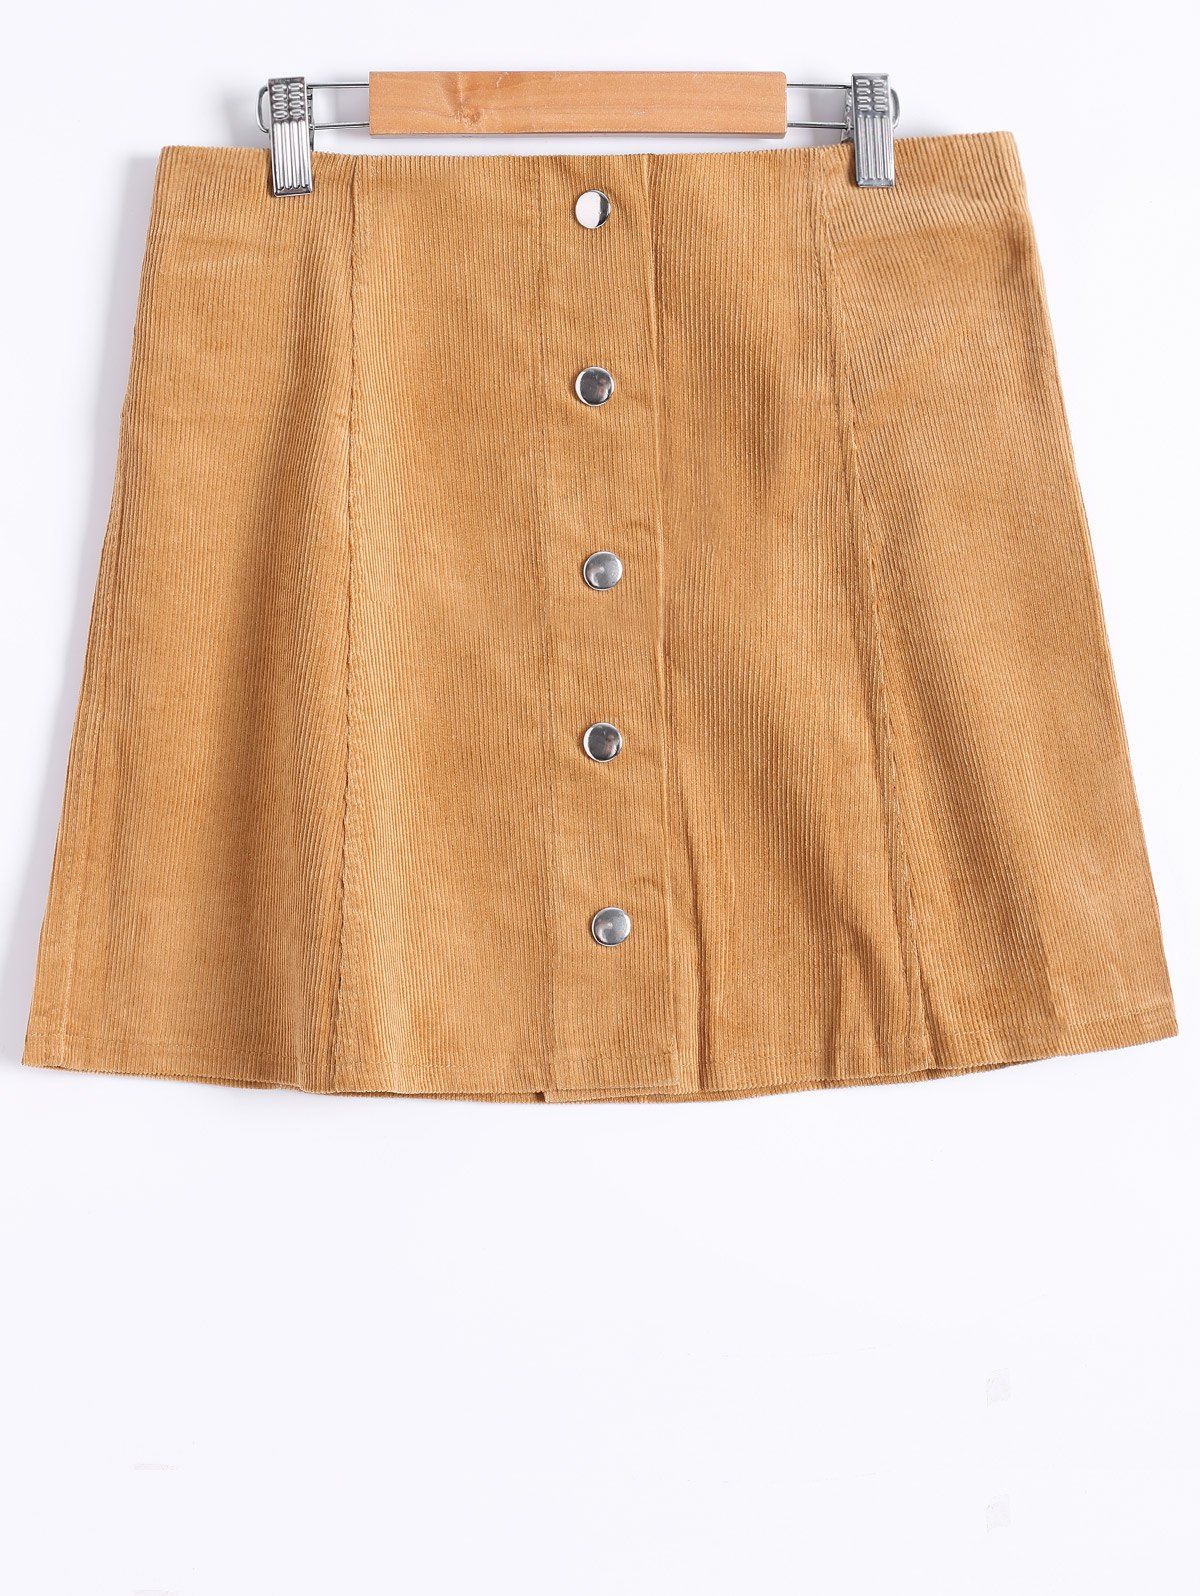 Popper Button Down A Line Skirt - KHAKI L